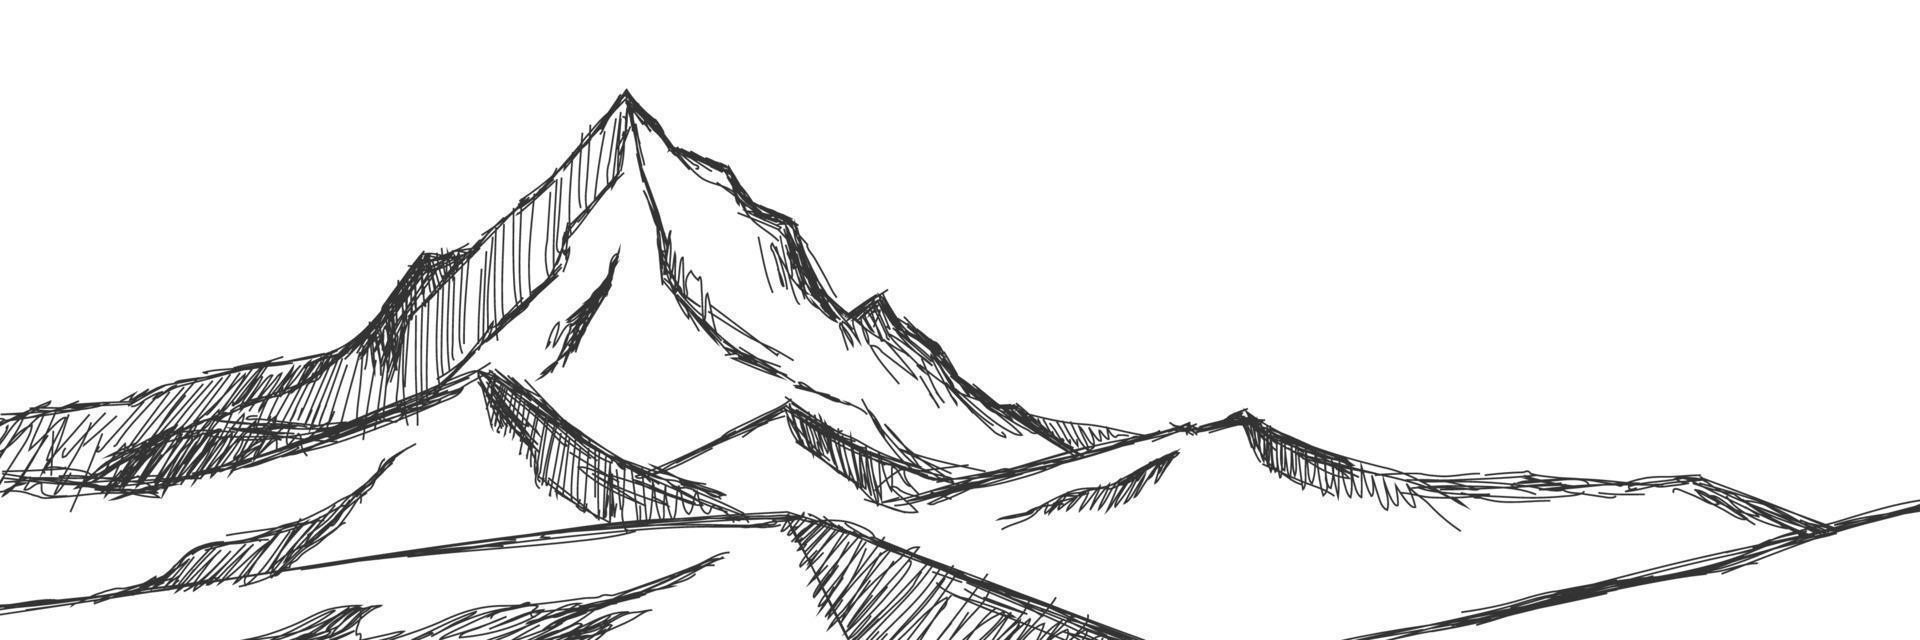 bergen skiss, gravyr stil, hand dragen vektor illustration